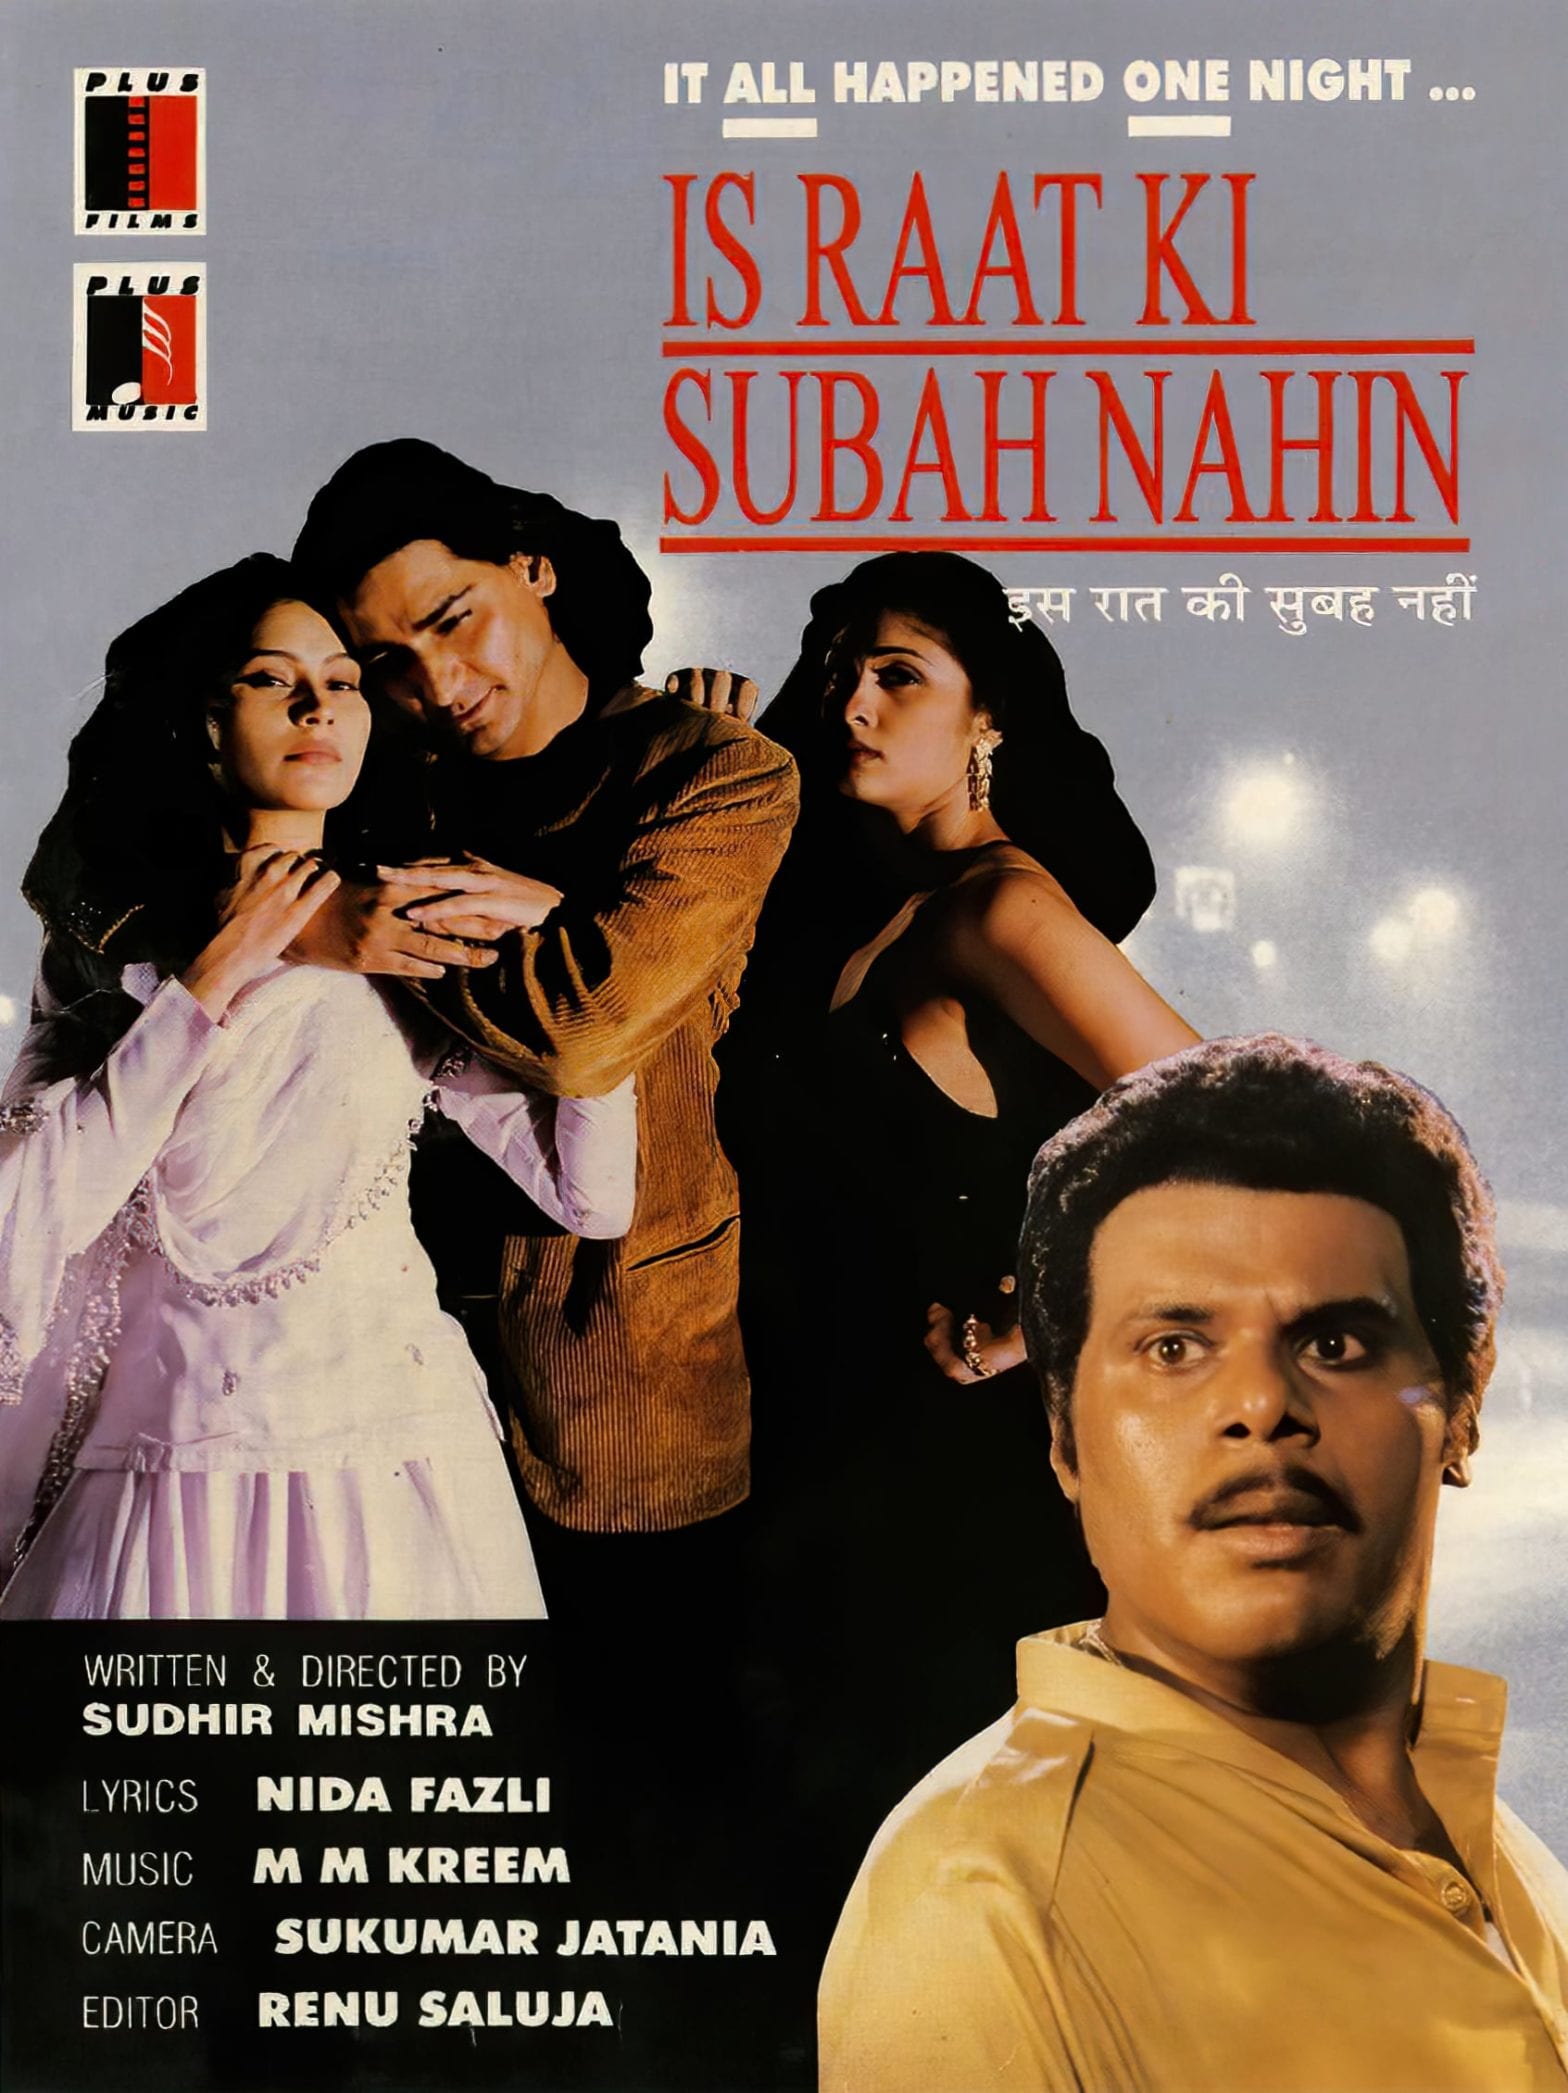 Poster for the movie "Is Raat Ki Subah Nahin"